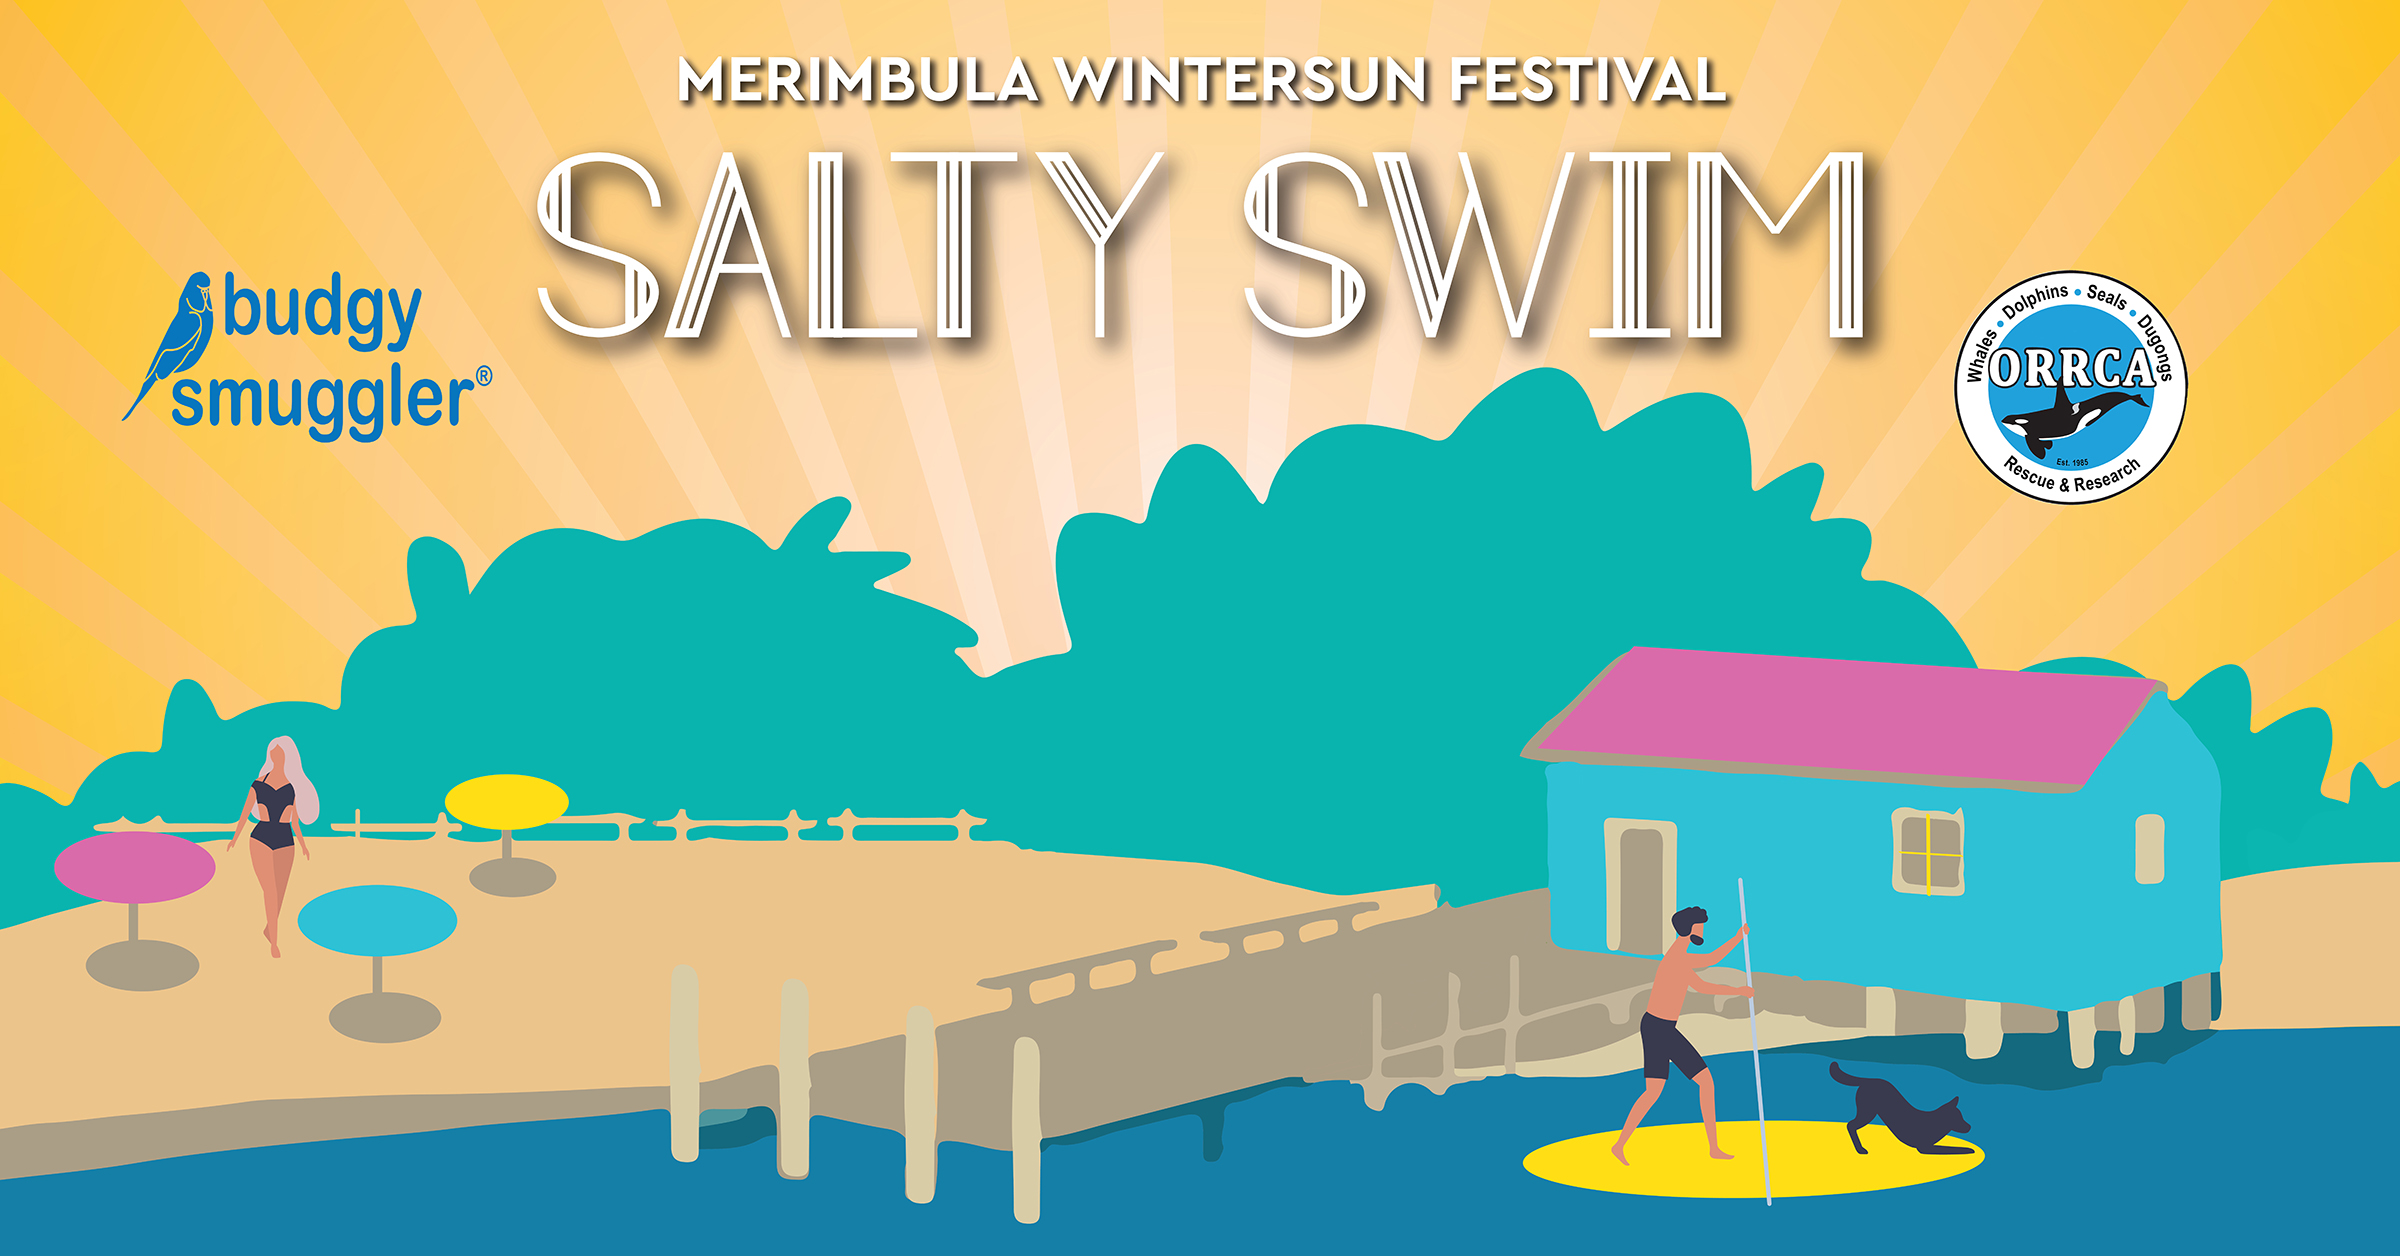 WinterSun Festival in Merimbula to warm hearts and souls over June long weekend